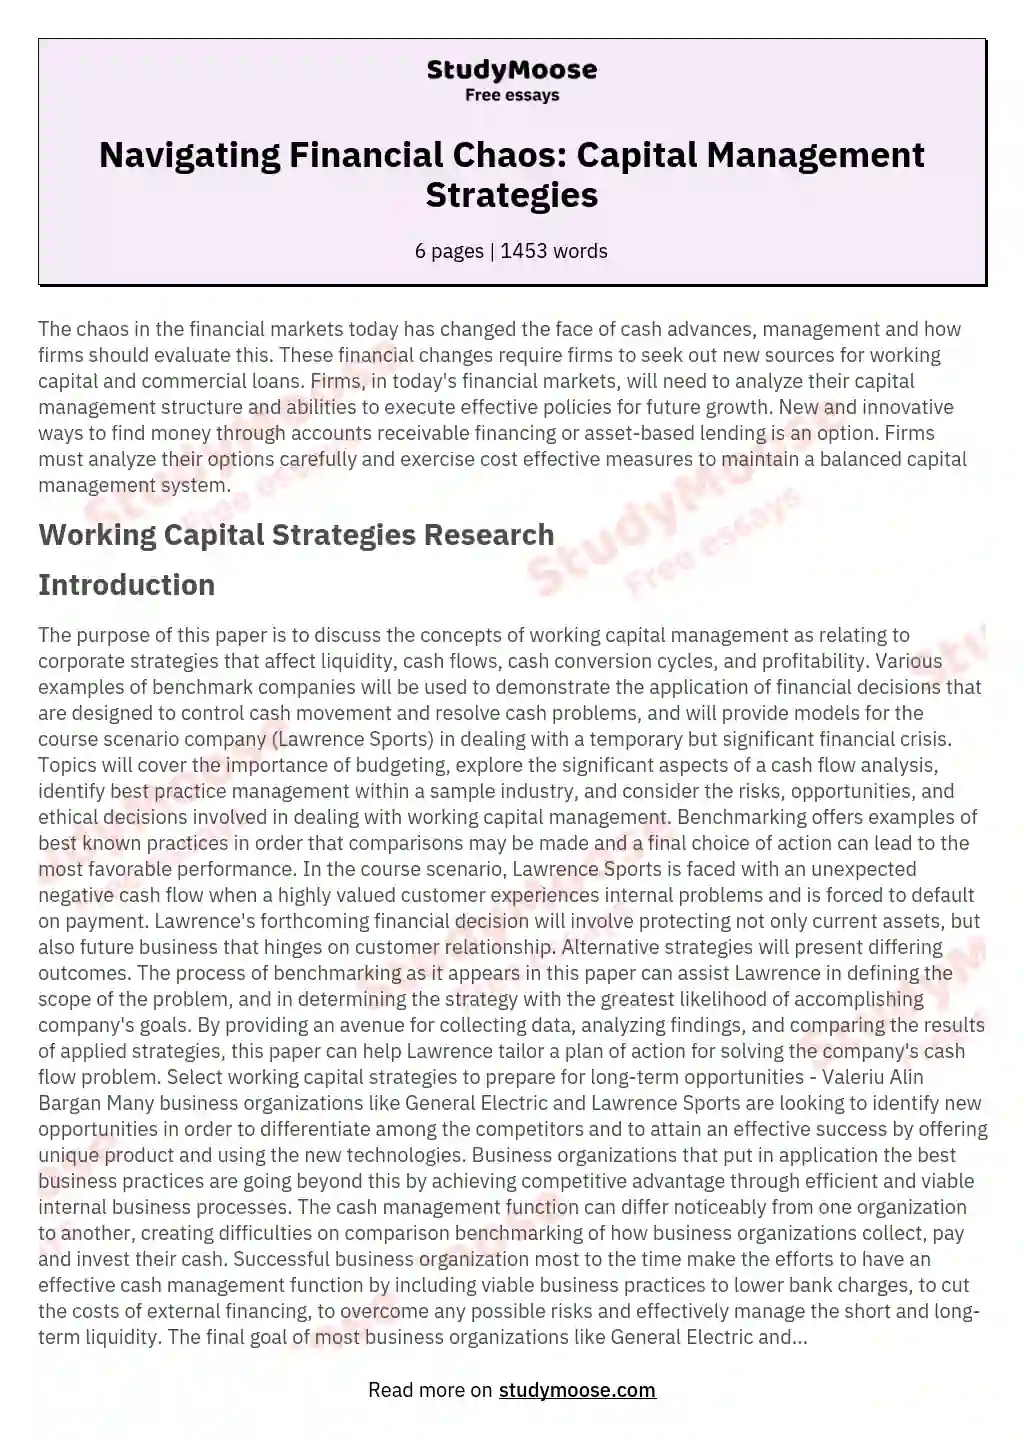 Navigating Financial Chaos: Capital Management Strategies essay